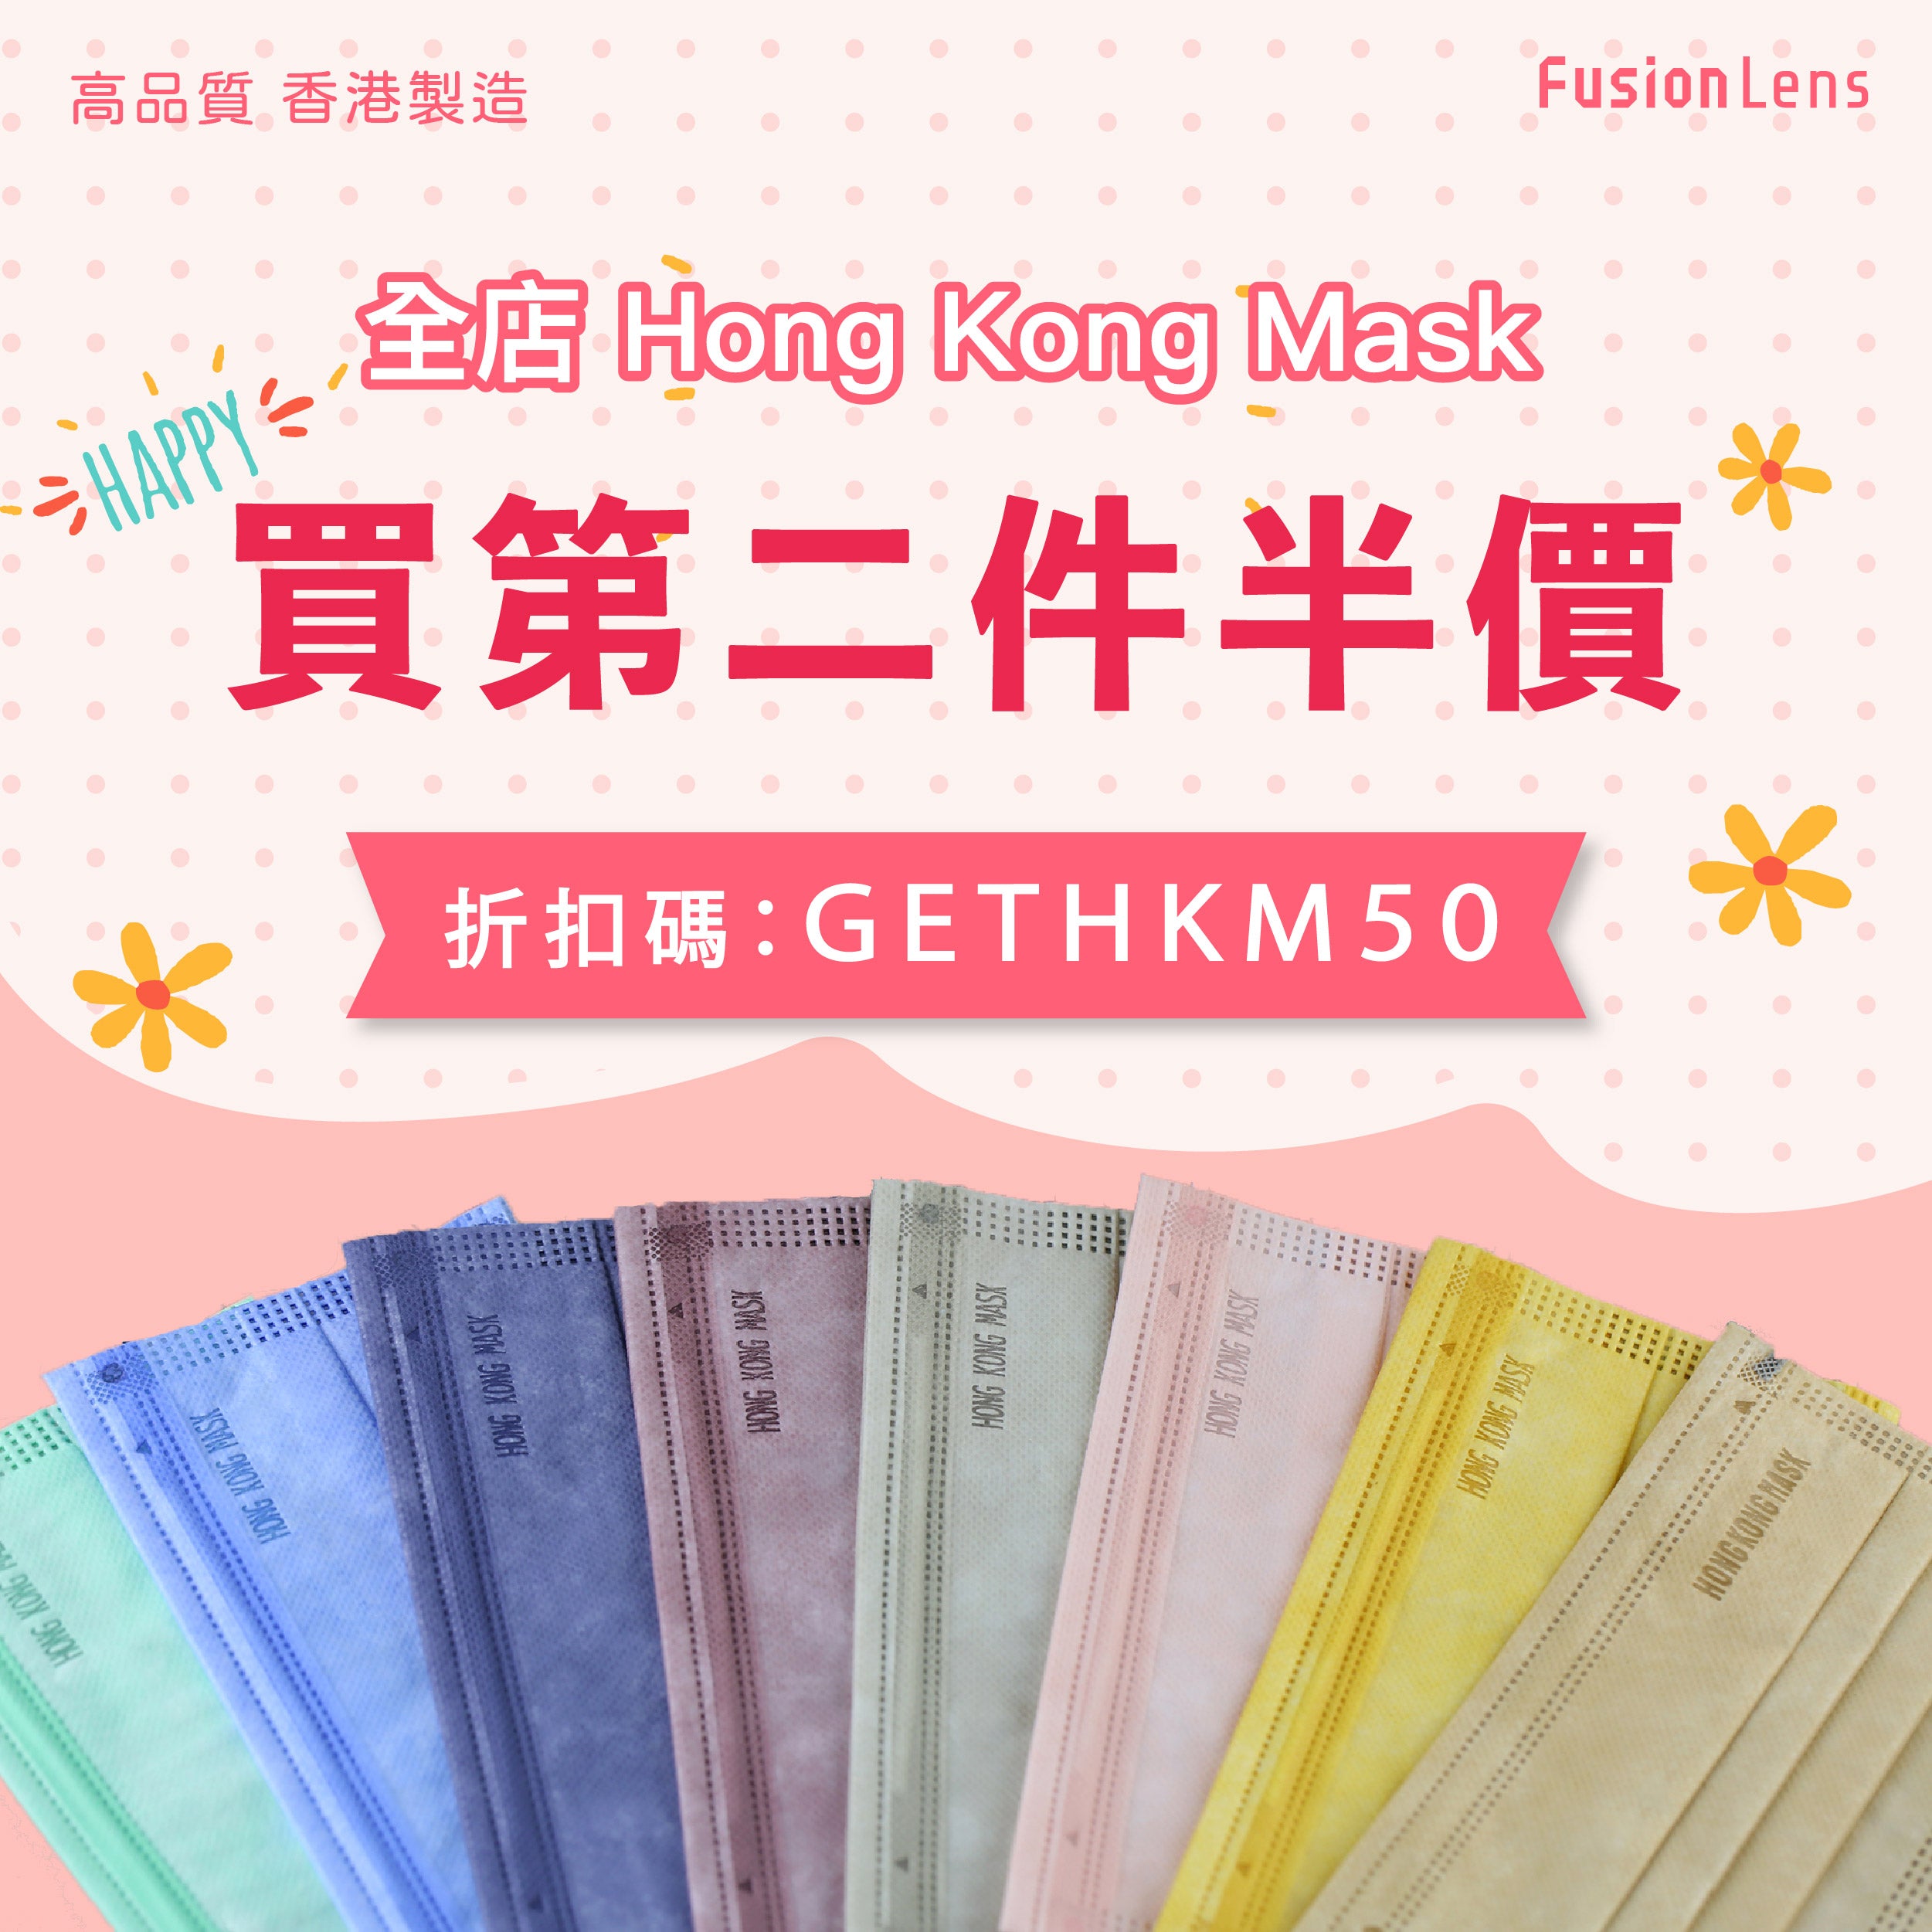 FusionLens summer sale - Buy one get second item 50% discount Hong Kong Mask. Protective masks made in Hong Kong. 